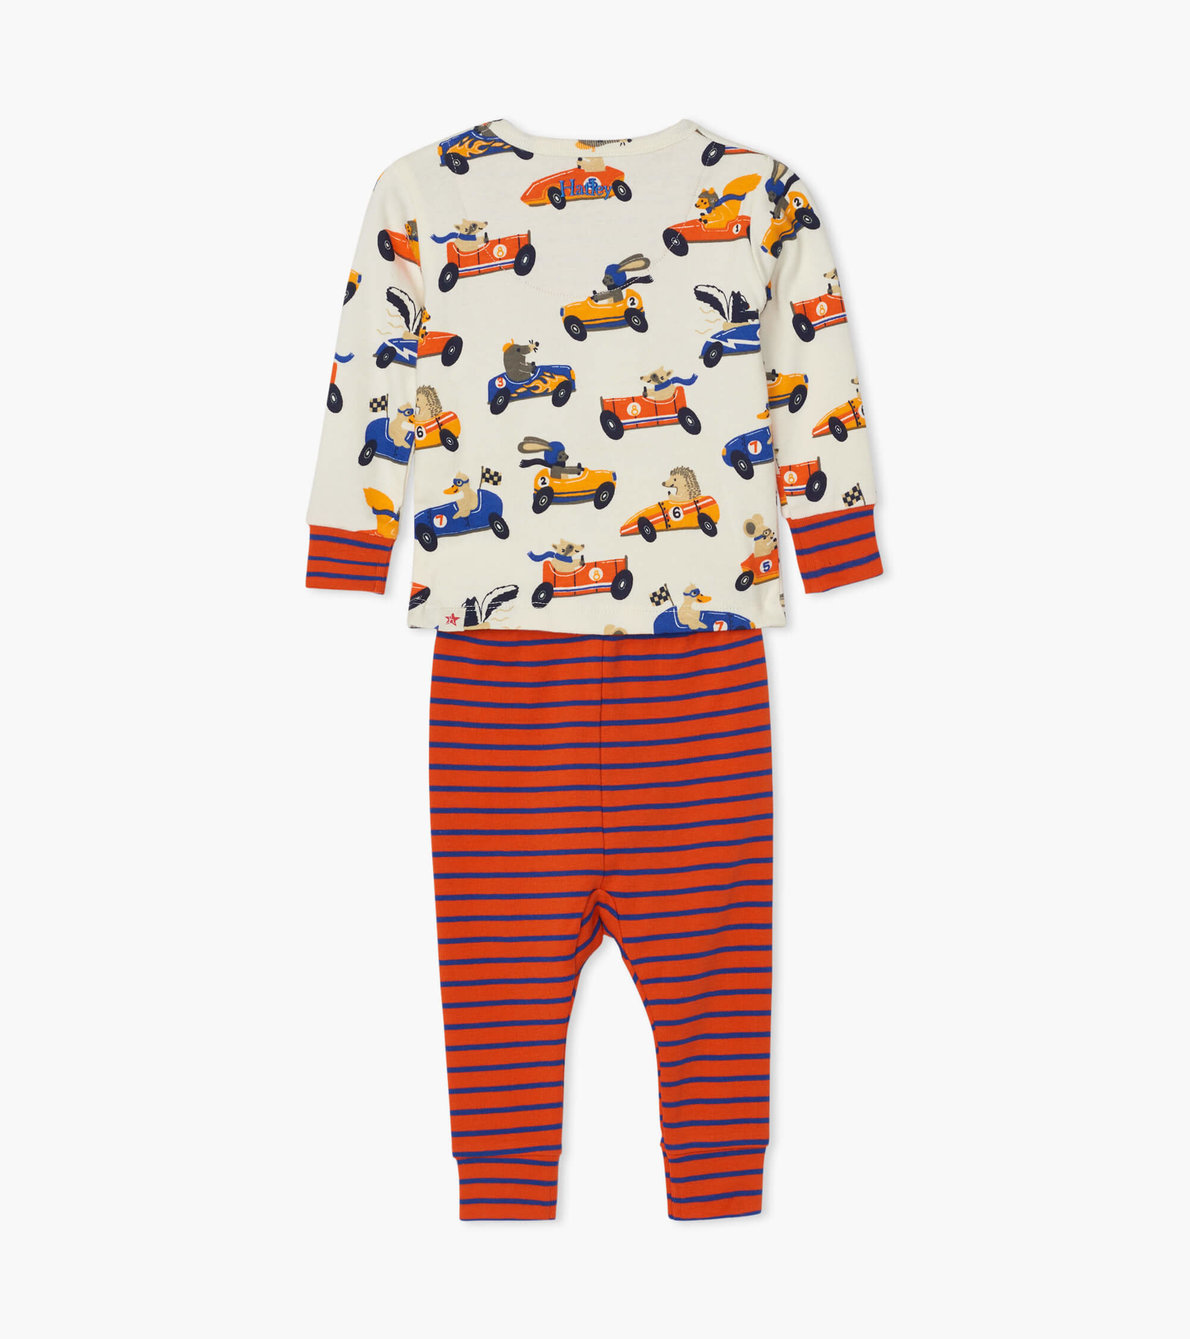 View larger image of Racing Animals Organic Cotton Baby Pajama Set